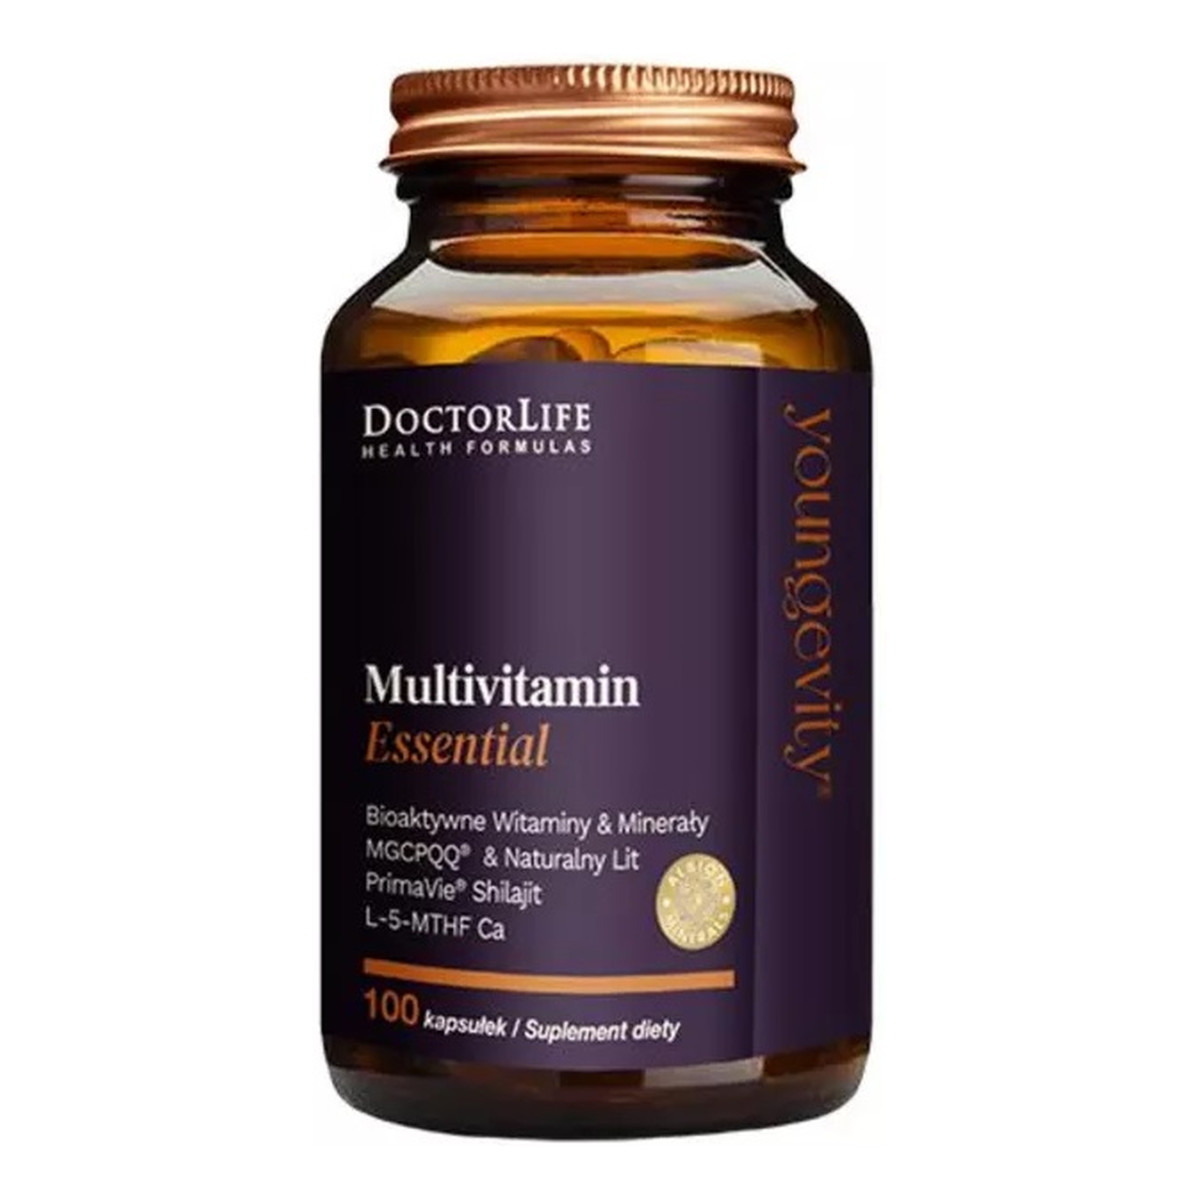 Doctor Life Multivitamin essential bioaktywne witaminy & minerały suplement diety 100 kapsułek